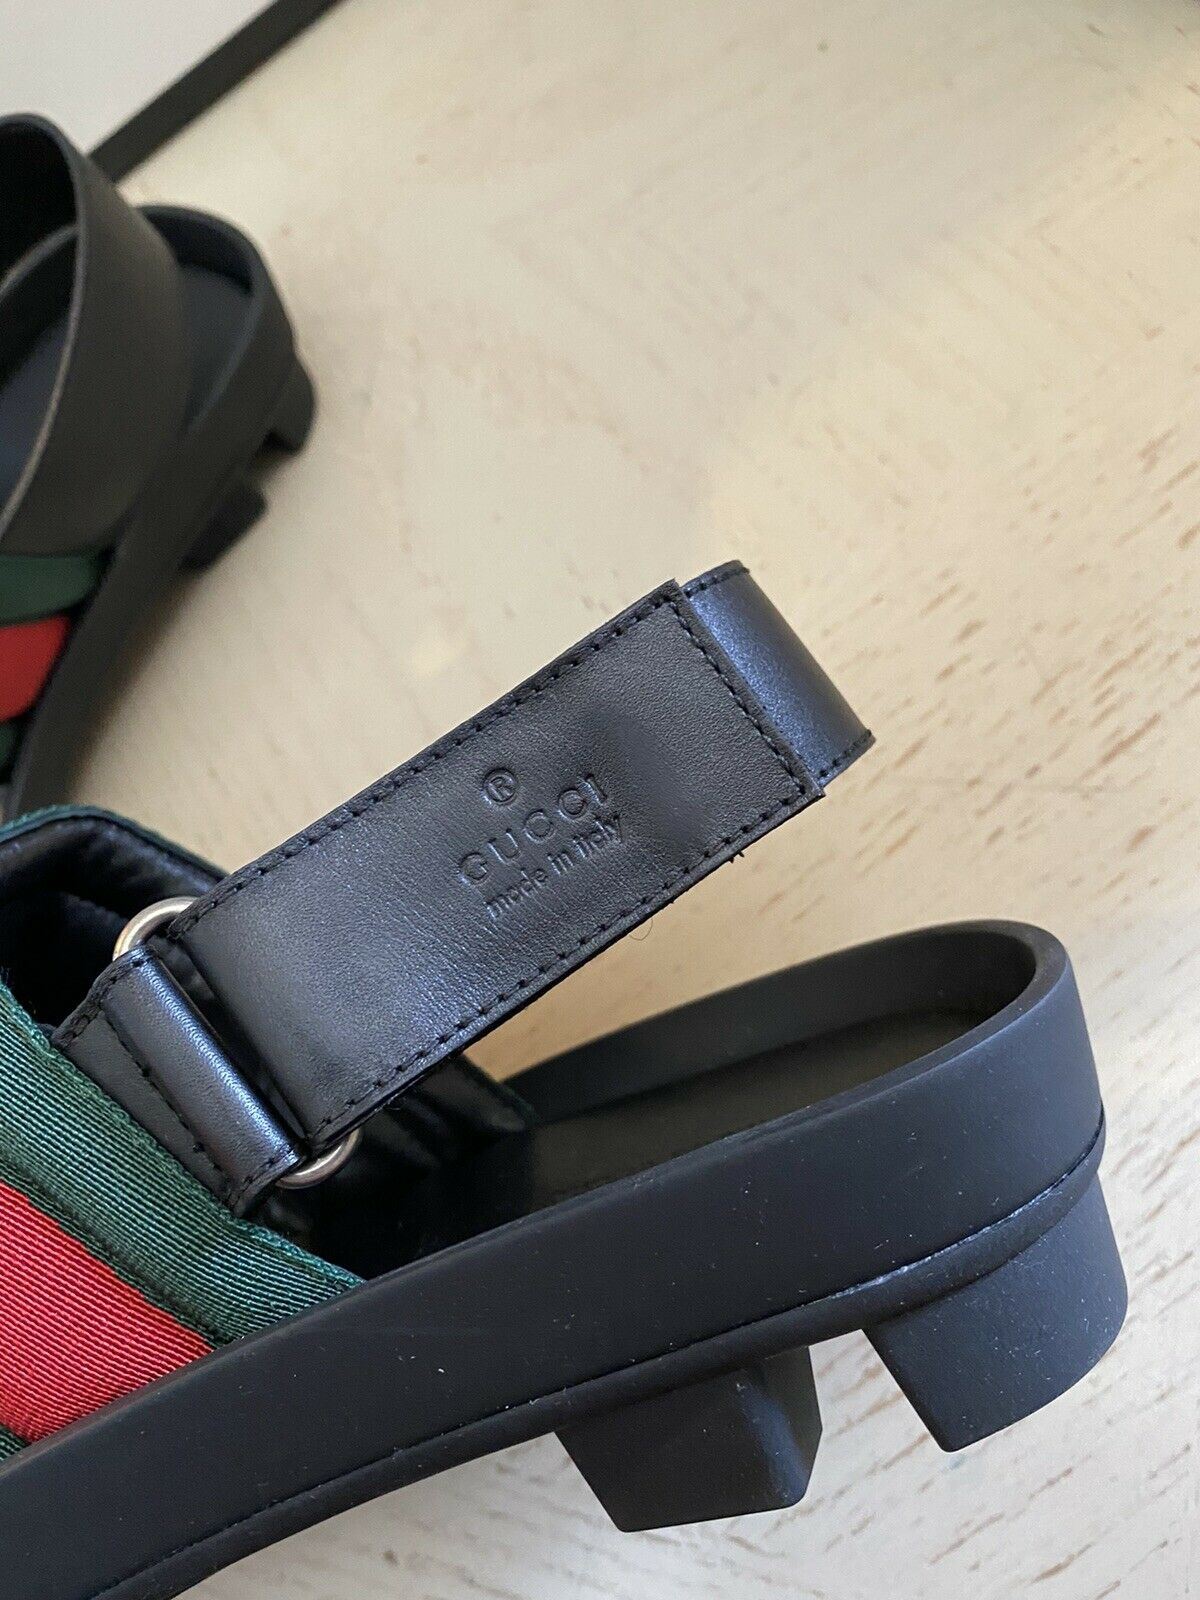 NIB Gucci Mens Sandal Shoes Green/Red/Black 8 US/7 UK Italy